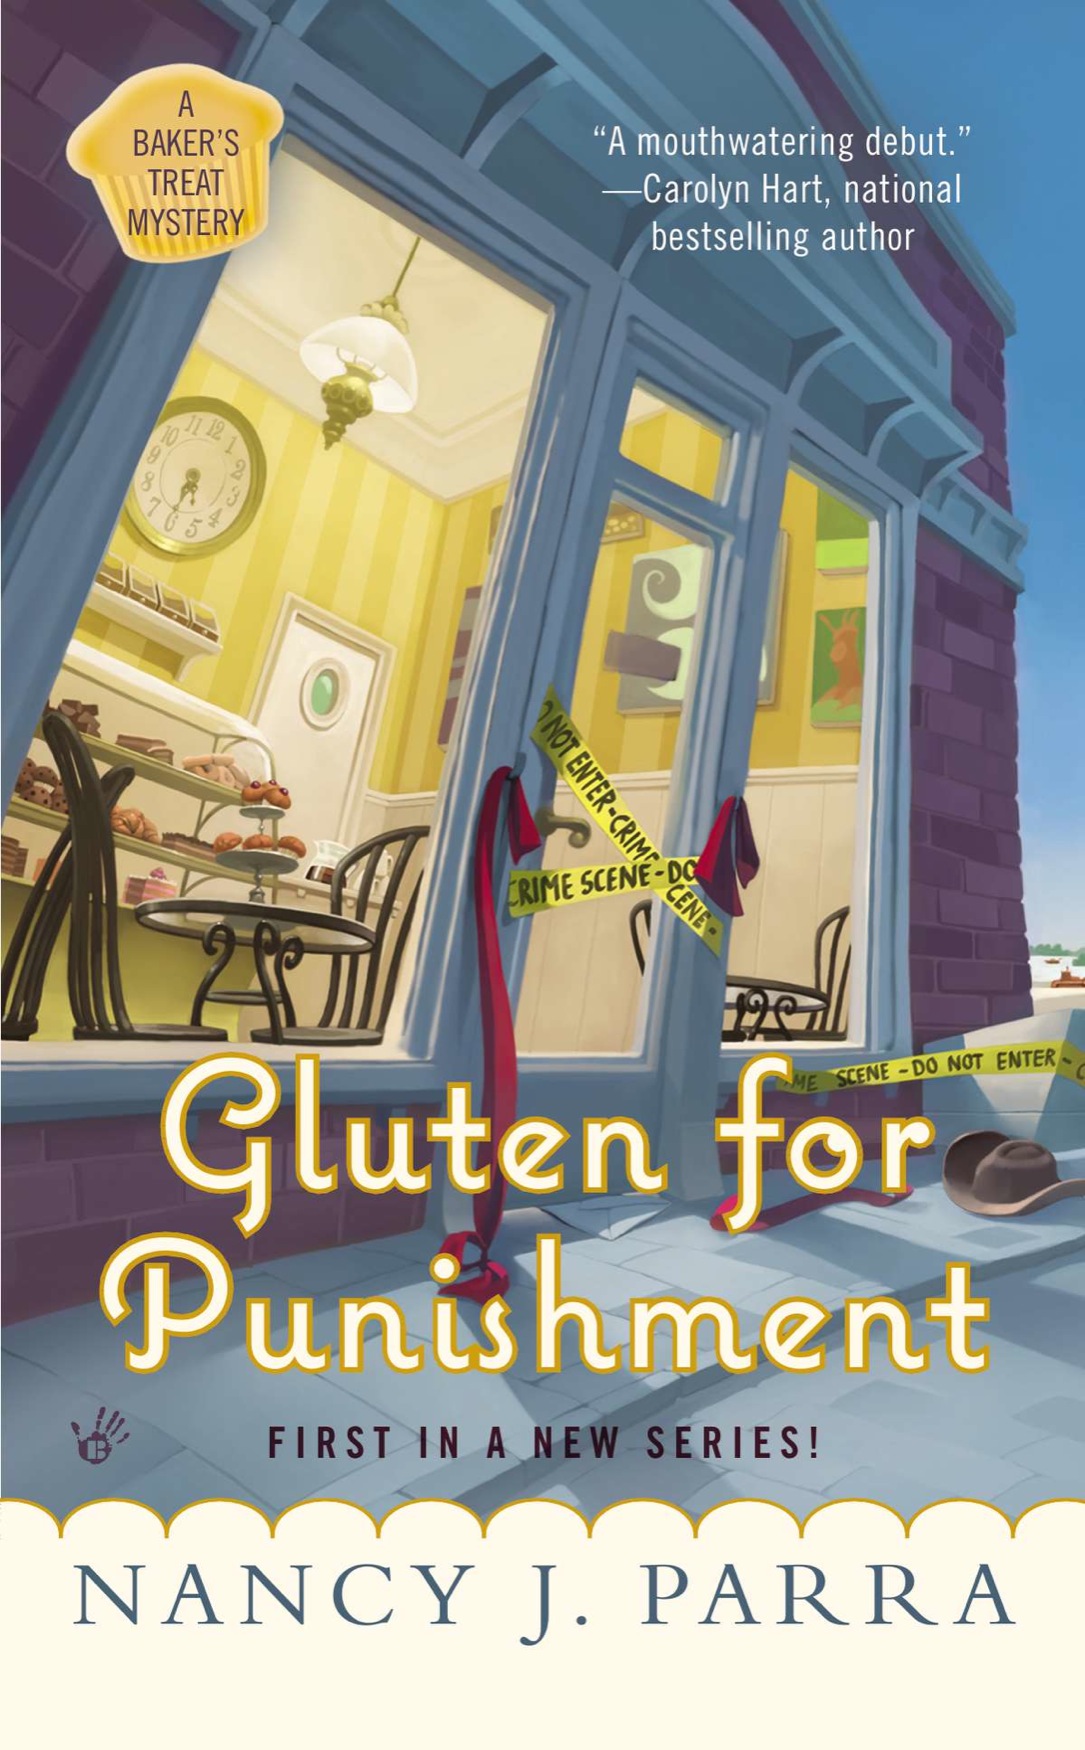 Gluten for Punishment (2013) by Nancy J. Parra